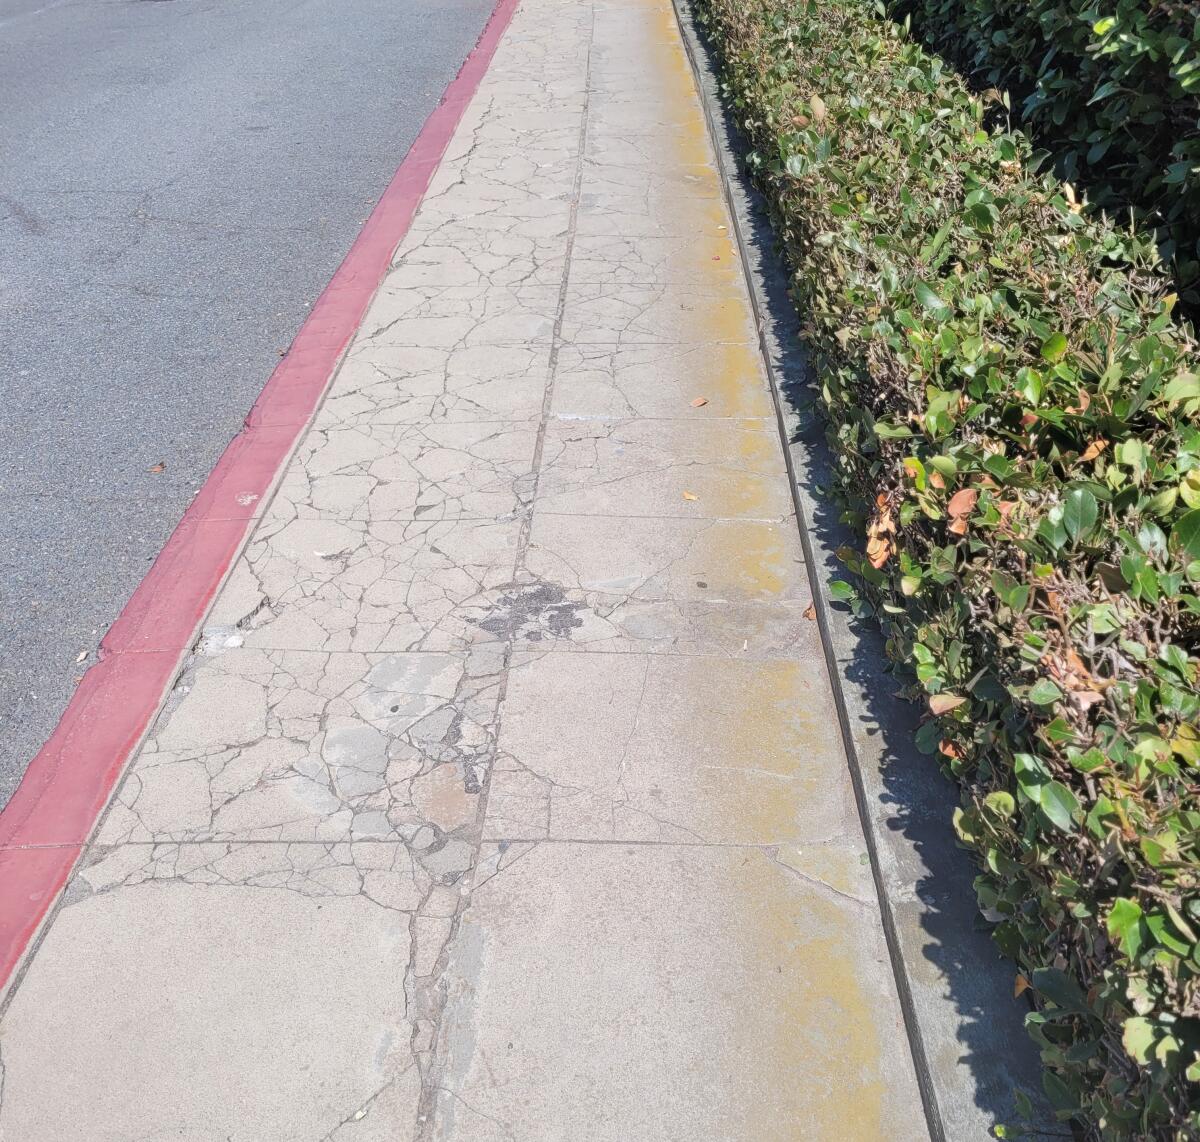 Cracked sidewalk at the corner of Sea Lane and Monte Vista Avenue in La Jolla